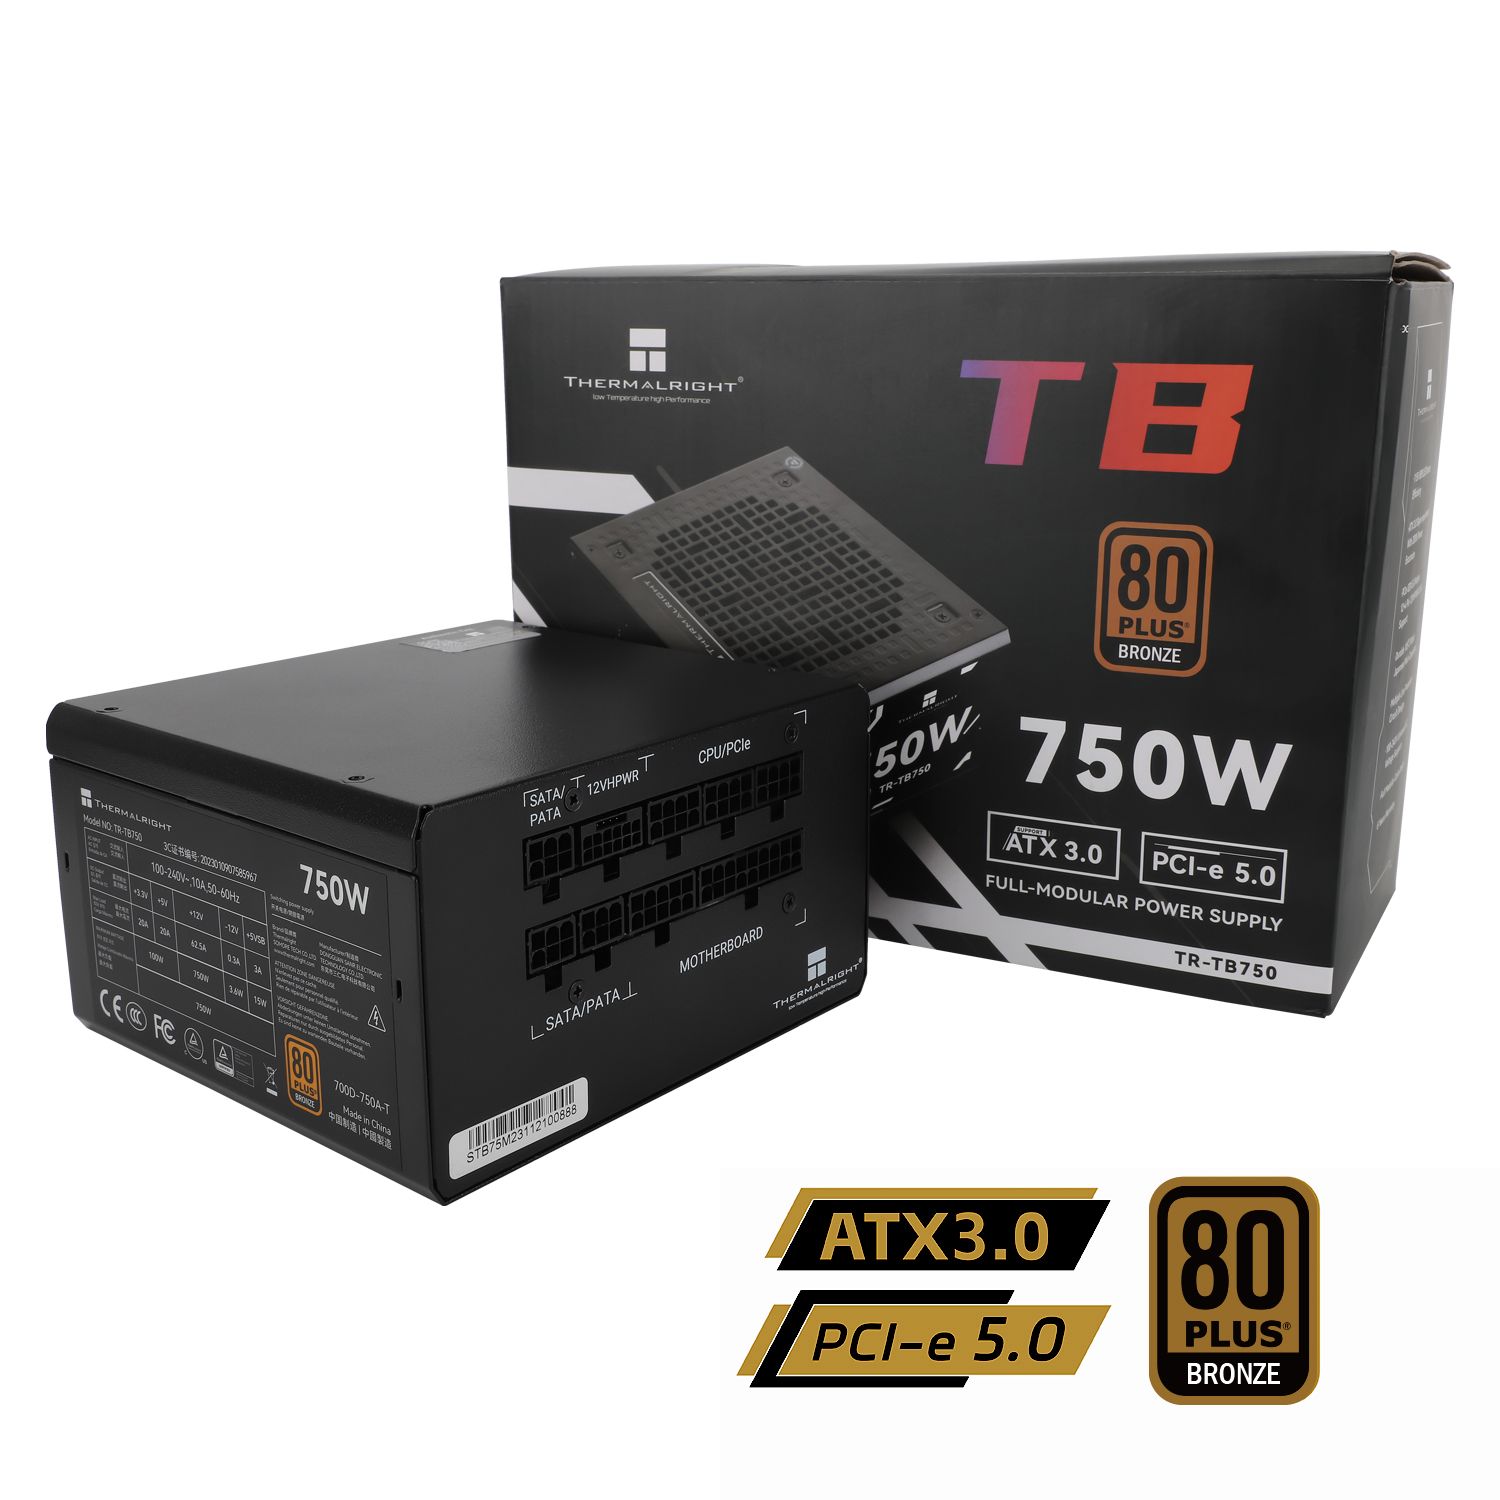 Nguồn Thermalright TB-750 - Đen, nhập khẩu | 750W, 80 Plus Bronze, Full Modular